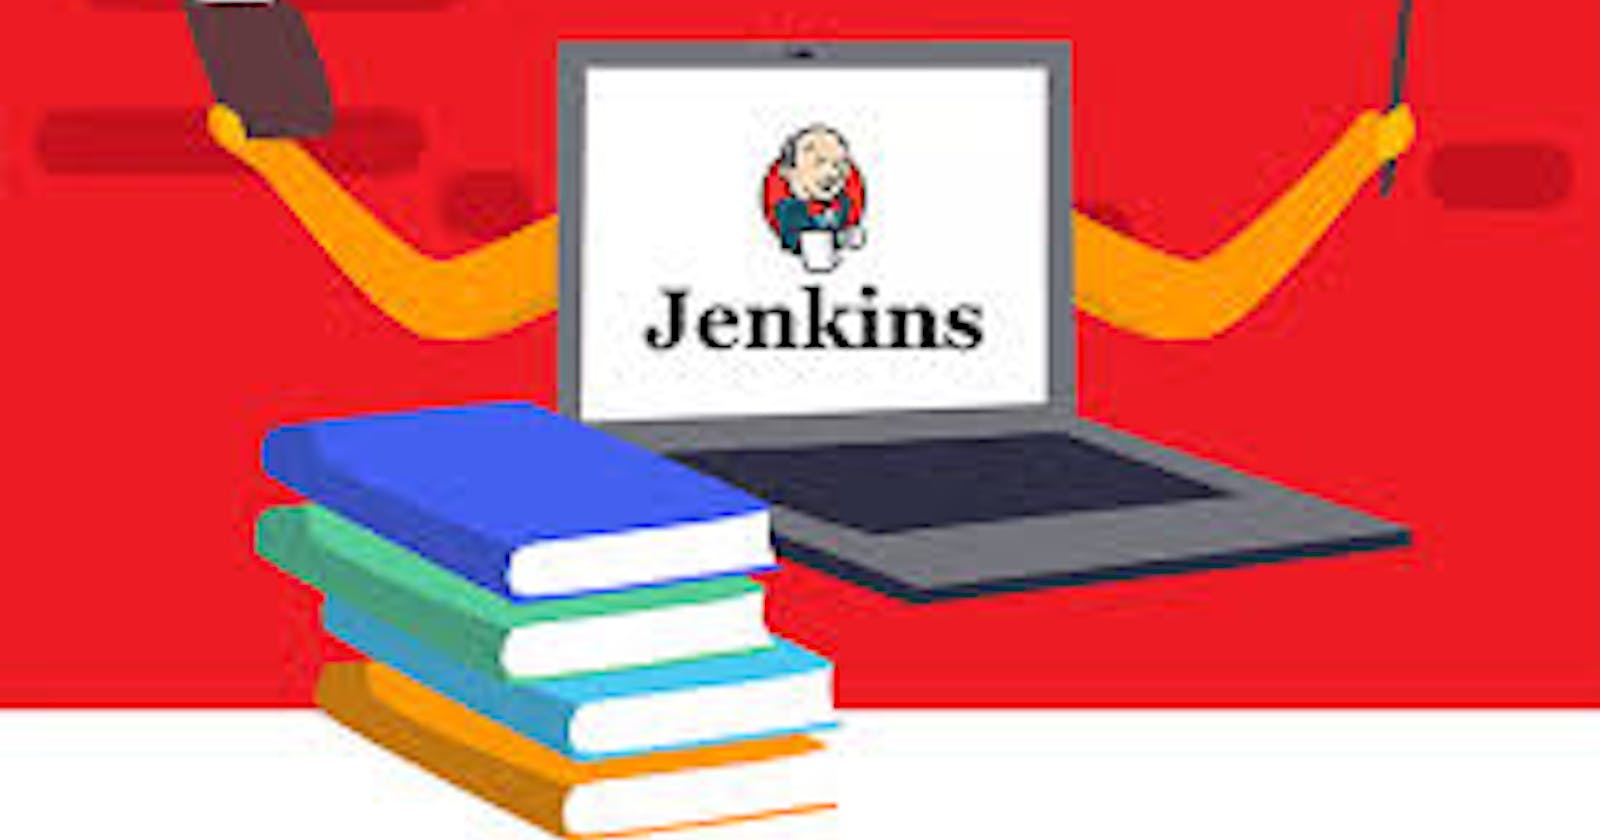 Day 26 Task: Jenkins Declarative Pipeline